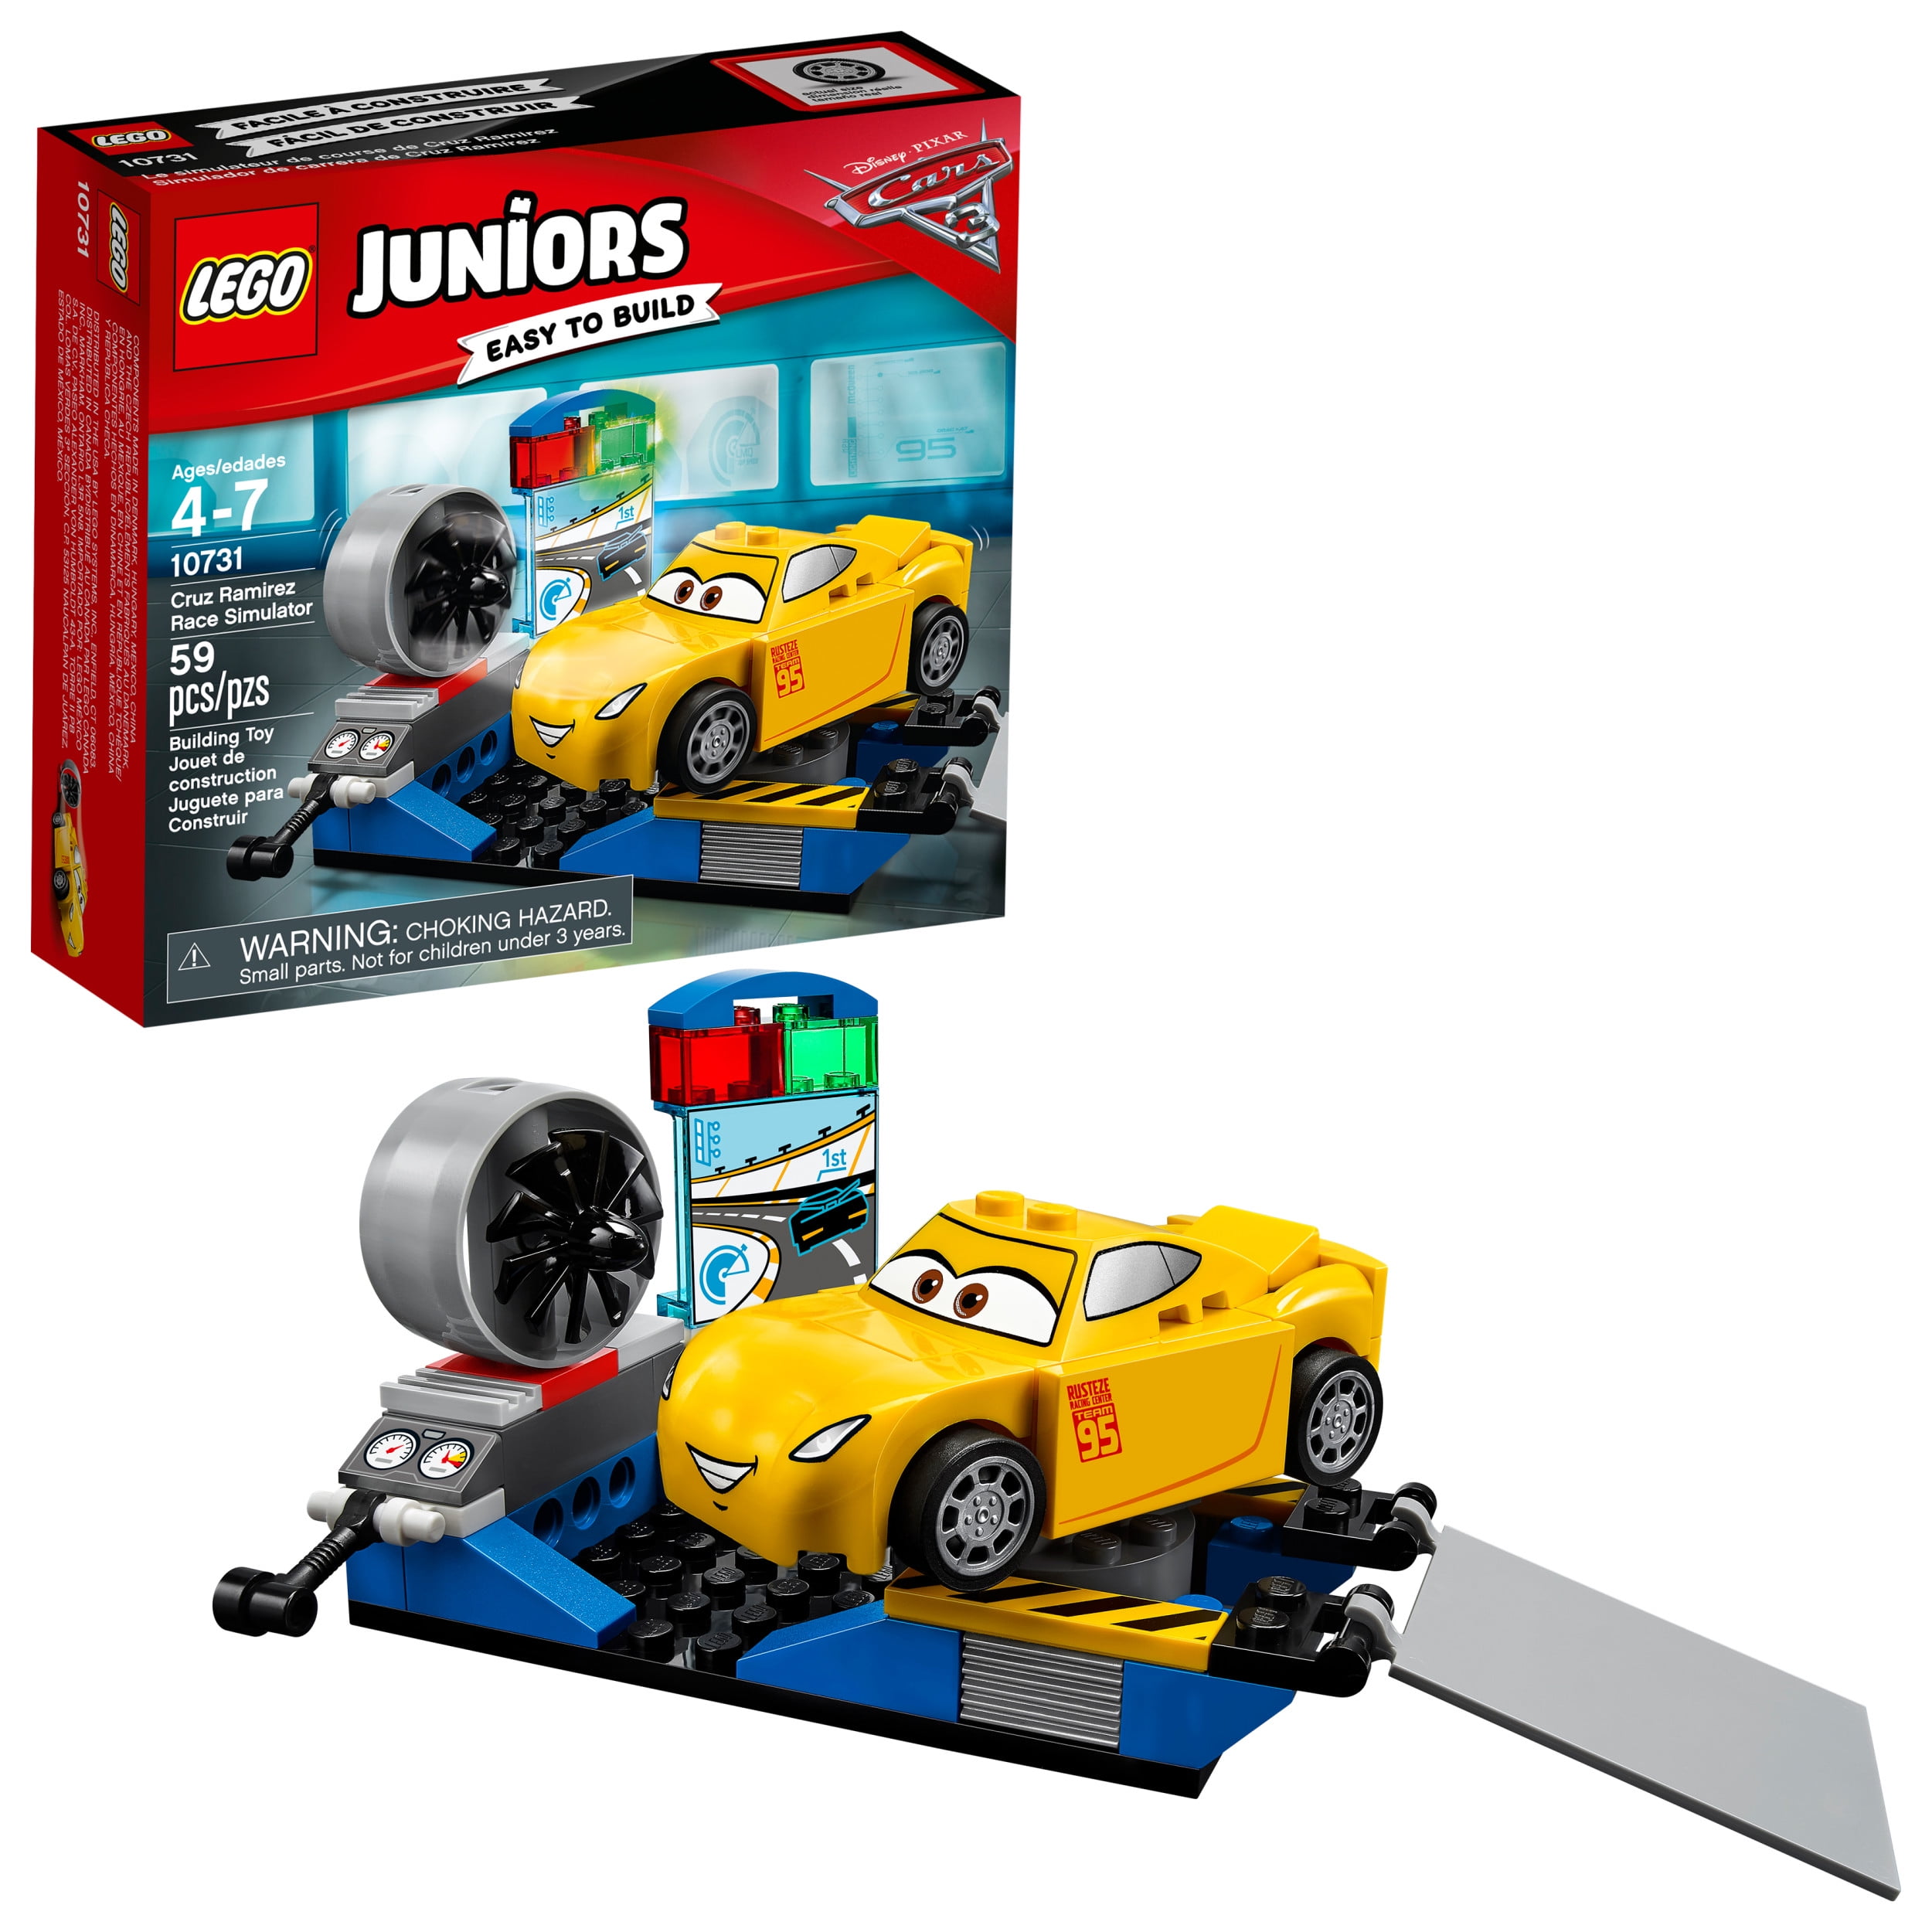 LEGO Juniors Cruz Ramirez Race Simulator 10731 (59 Pieces